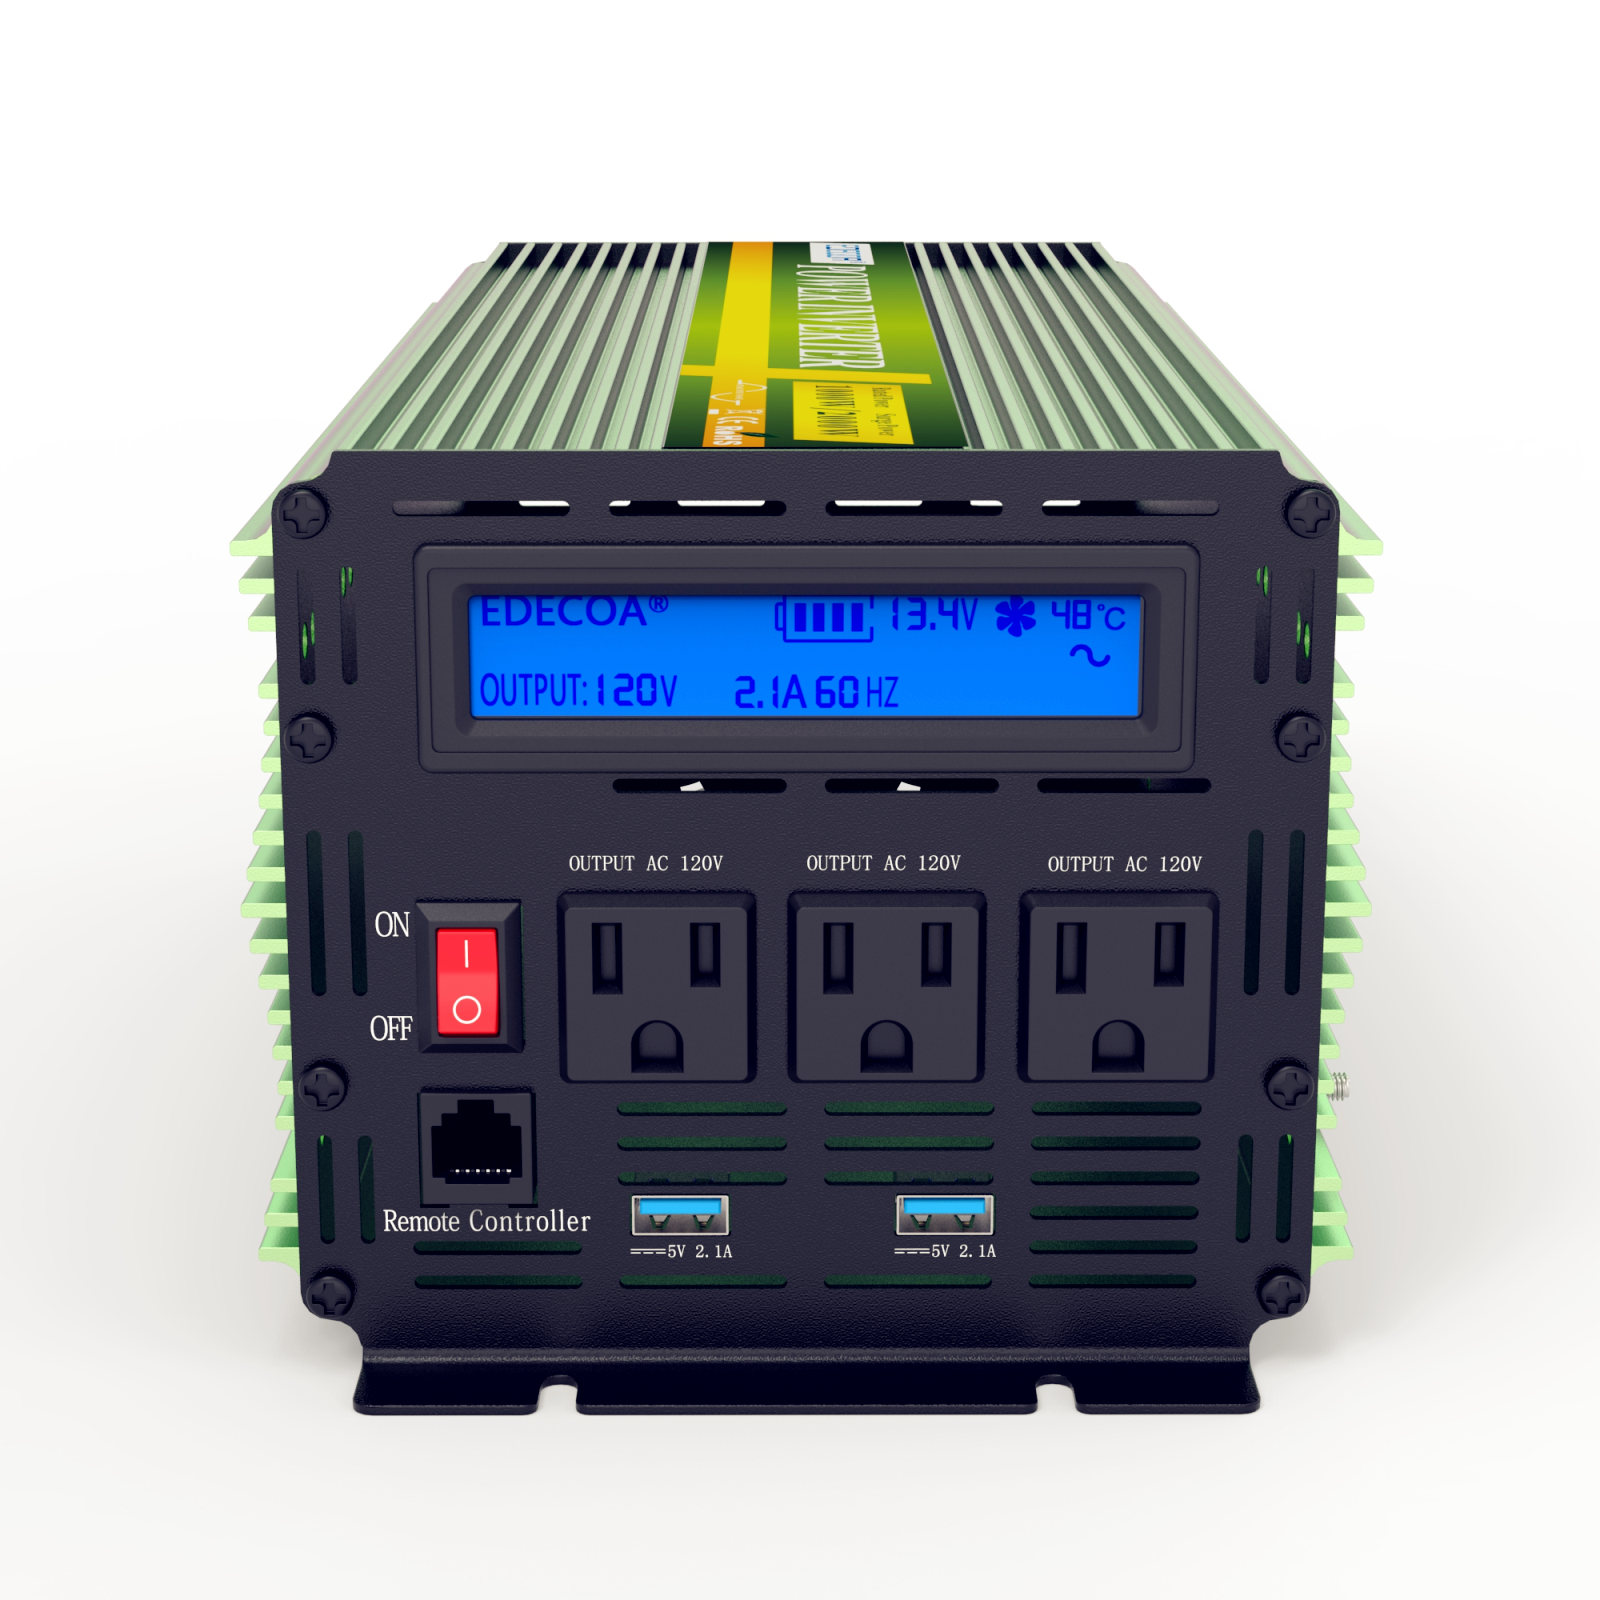 EDECOA-1000W-LCD-Power-Inverter-12V-120V-Pure-Sine-Wave-2x-USB-and-remote-controller-Green-V3-4